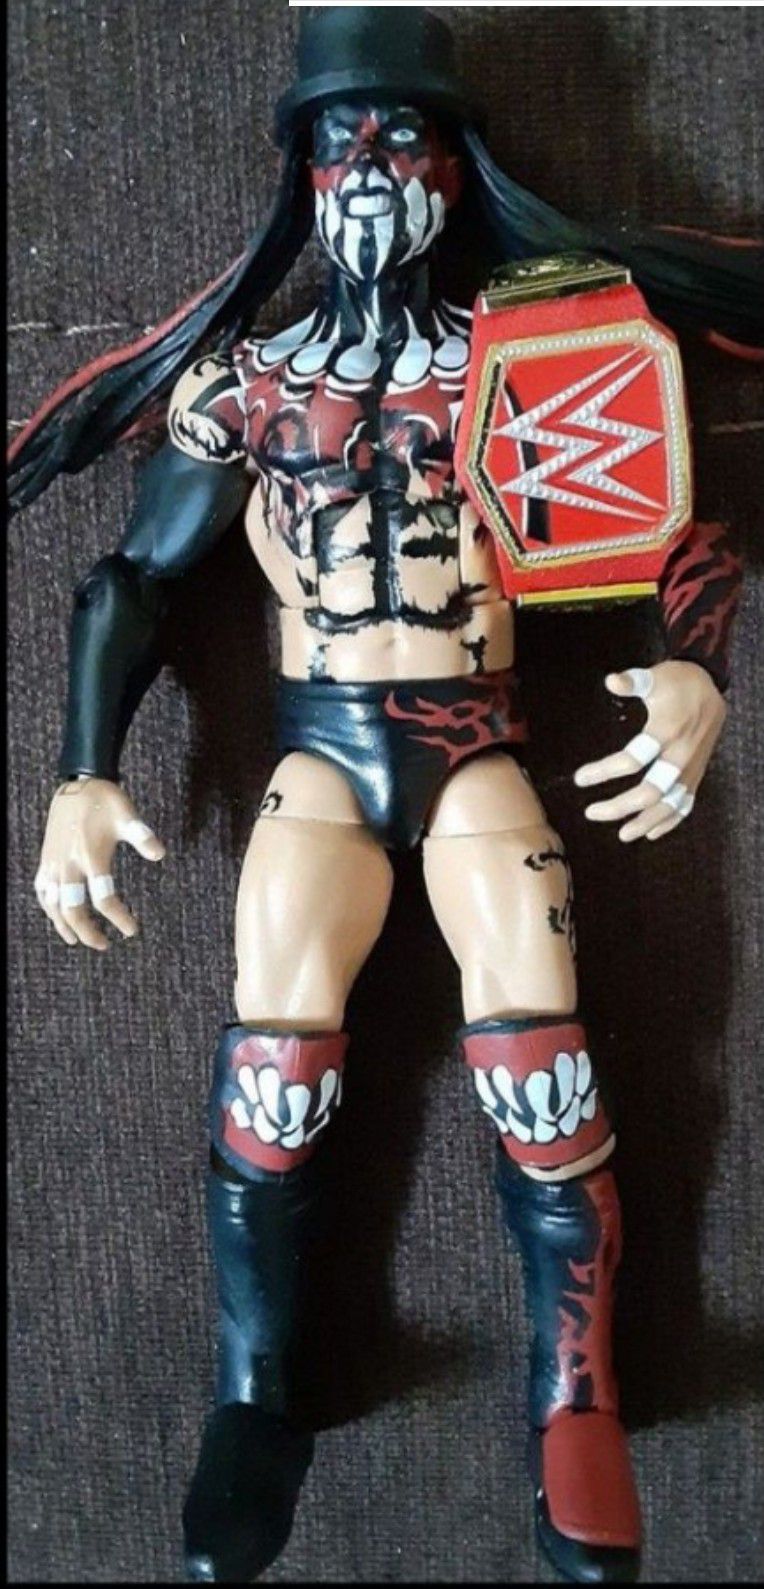 WWE Elite Collection Finn Balor "Demon" Action Figure.